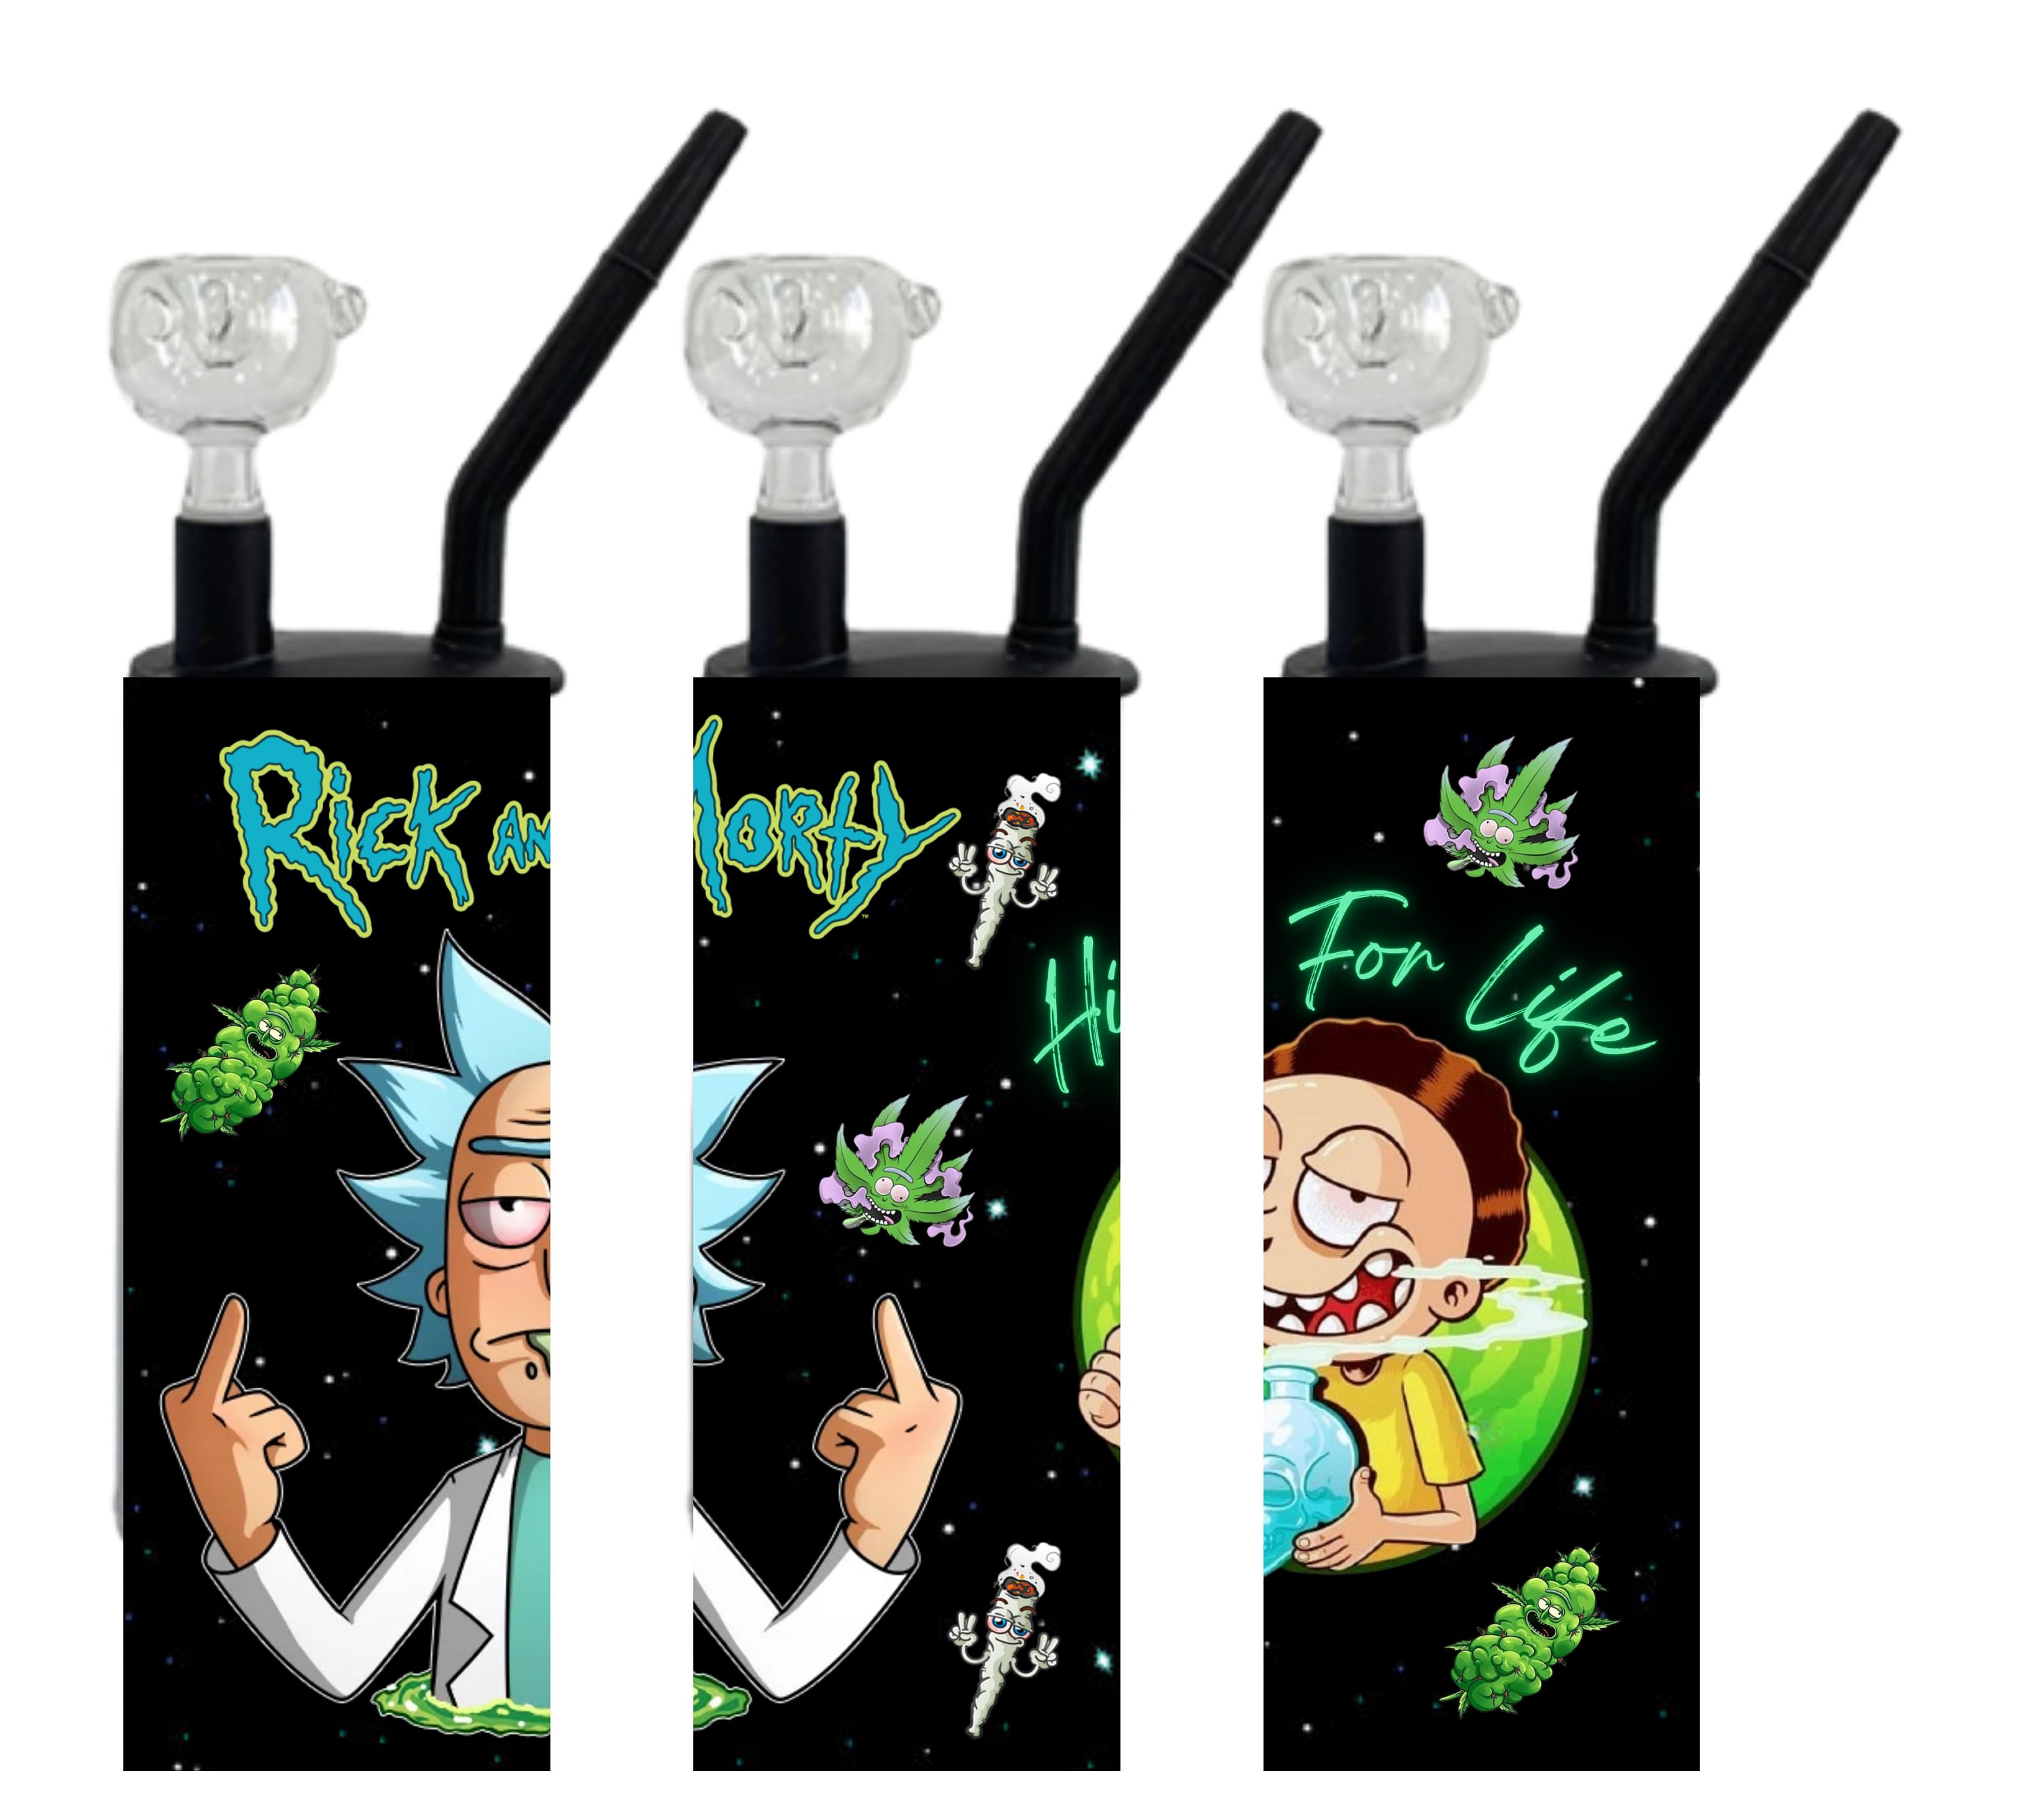 Spiritual Rick and Morty wallpaper for Smartphones : r/rickandmorty